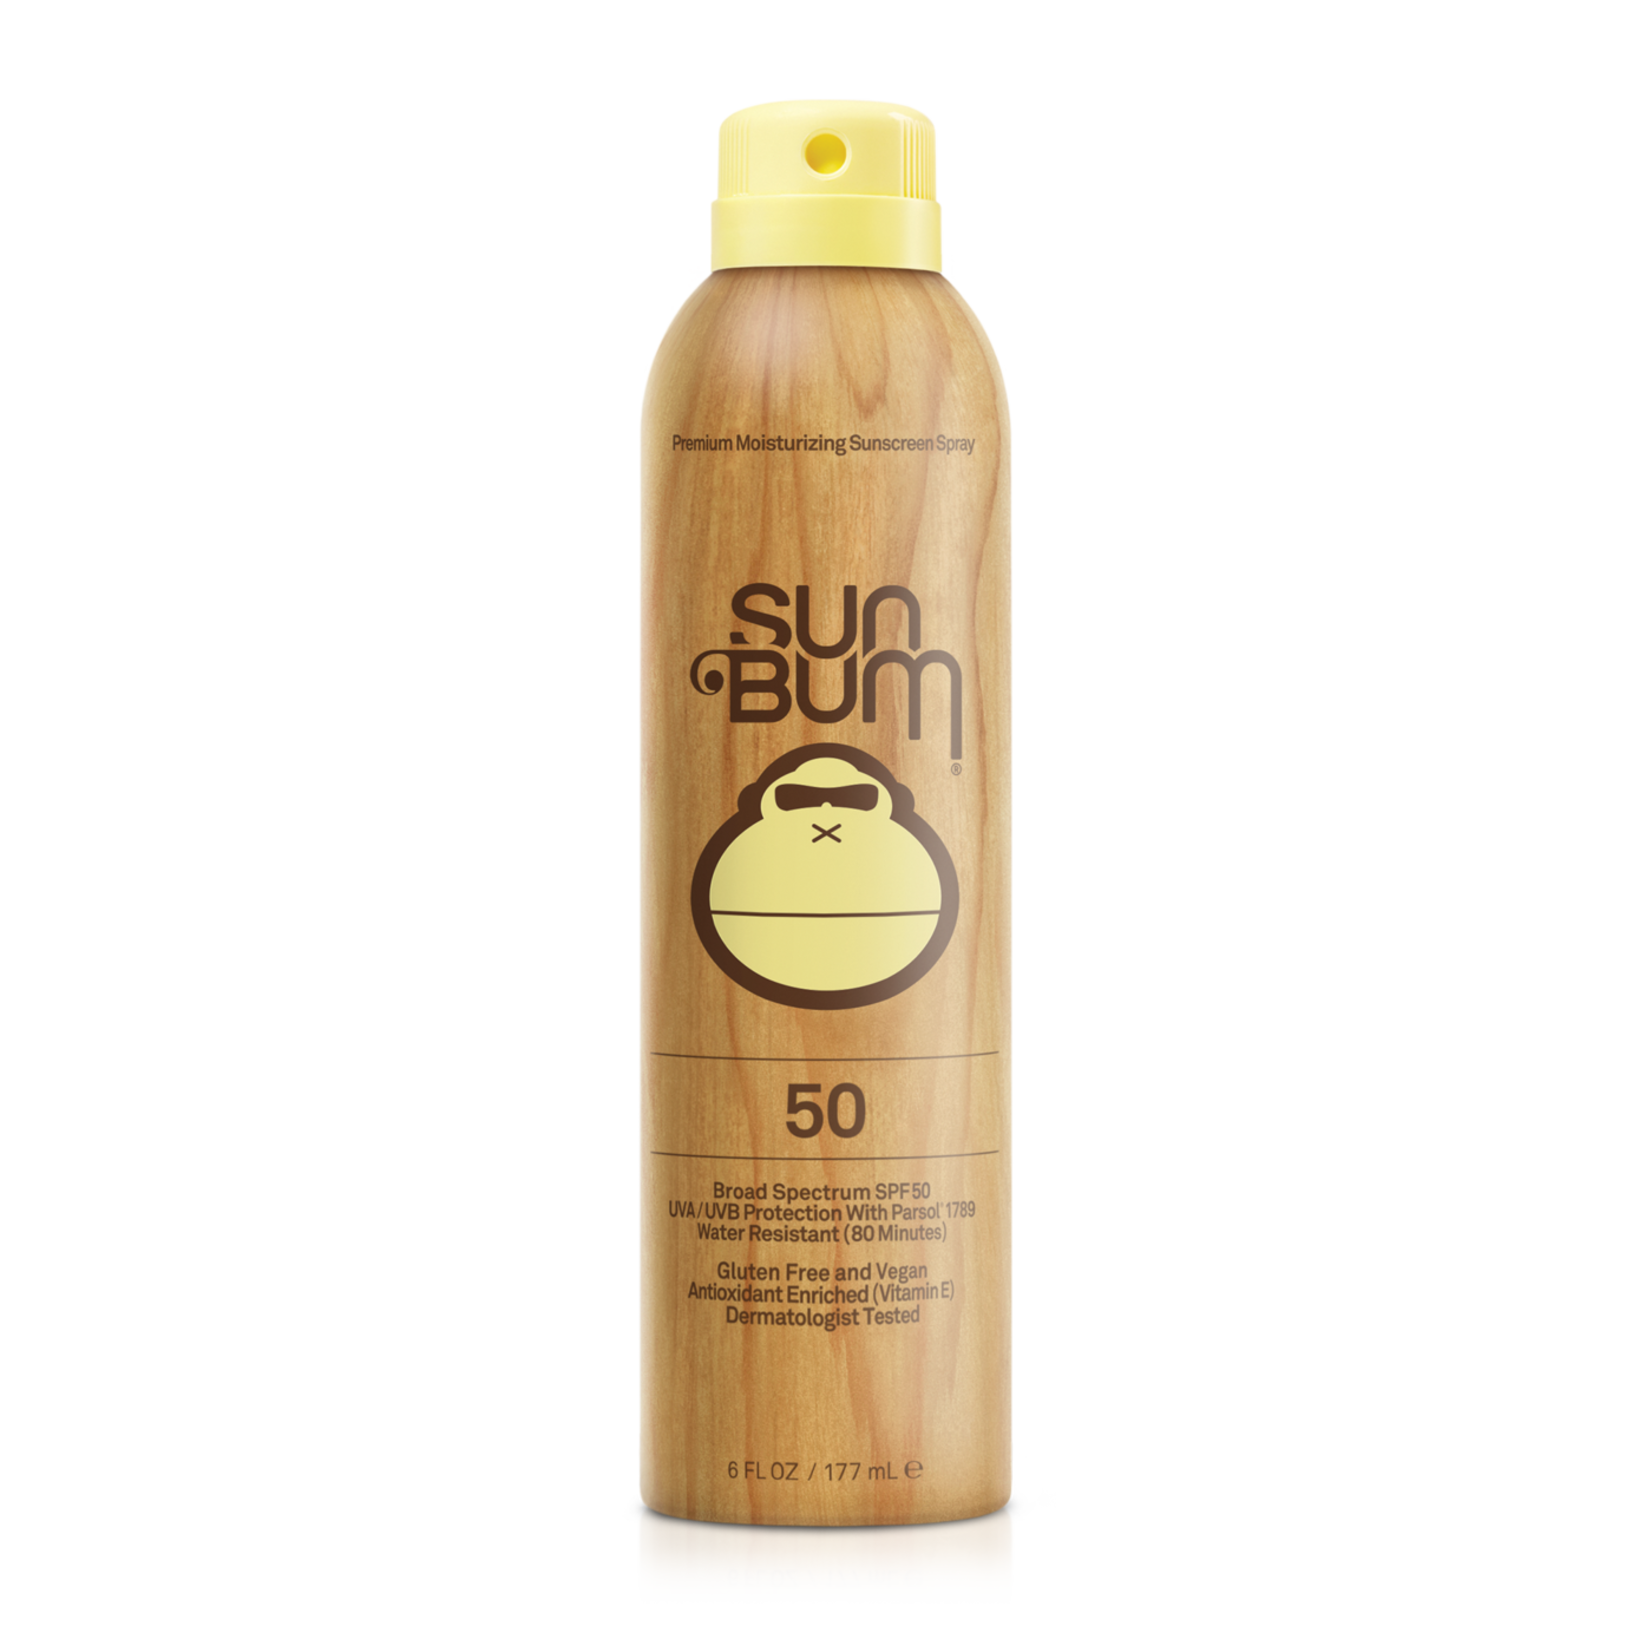 Sun Bum Sun Bum Original Sunscreen Spray